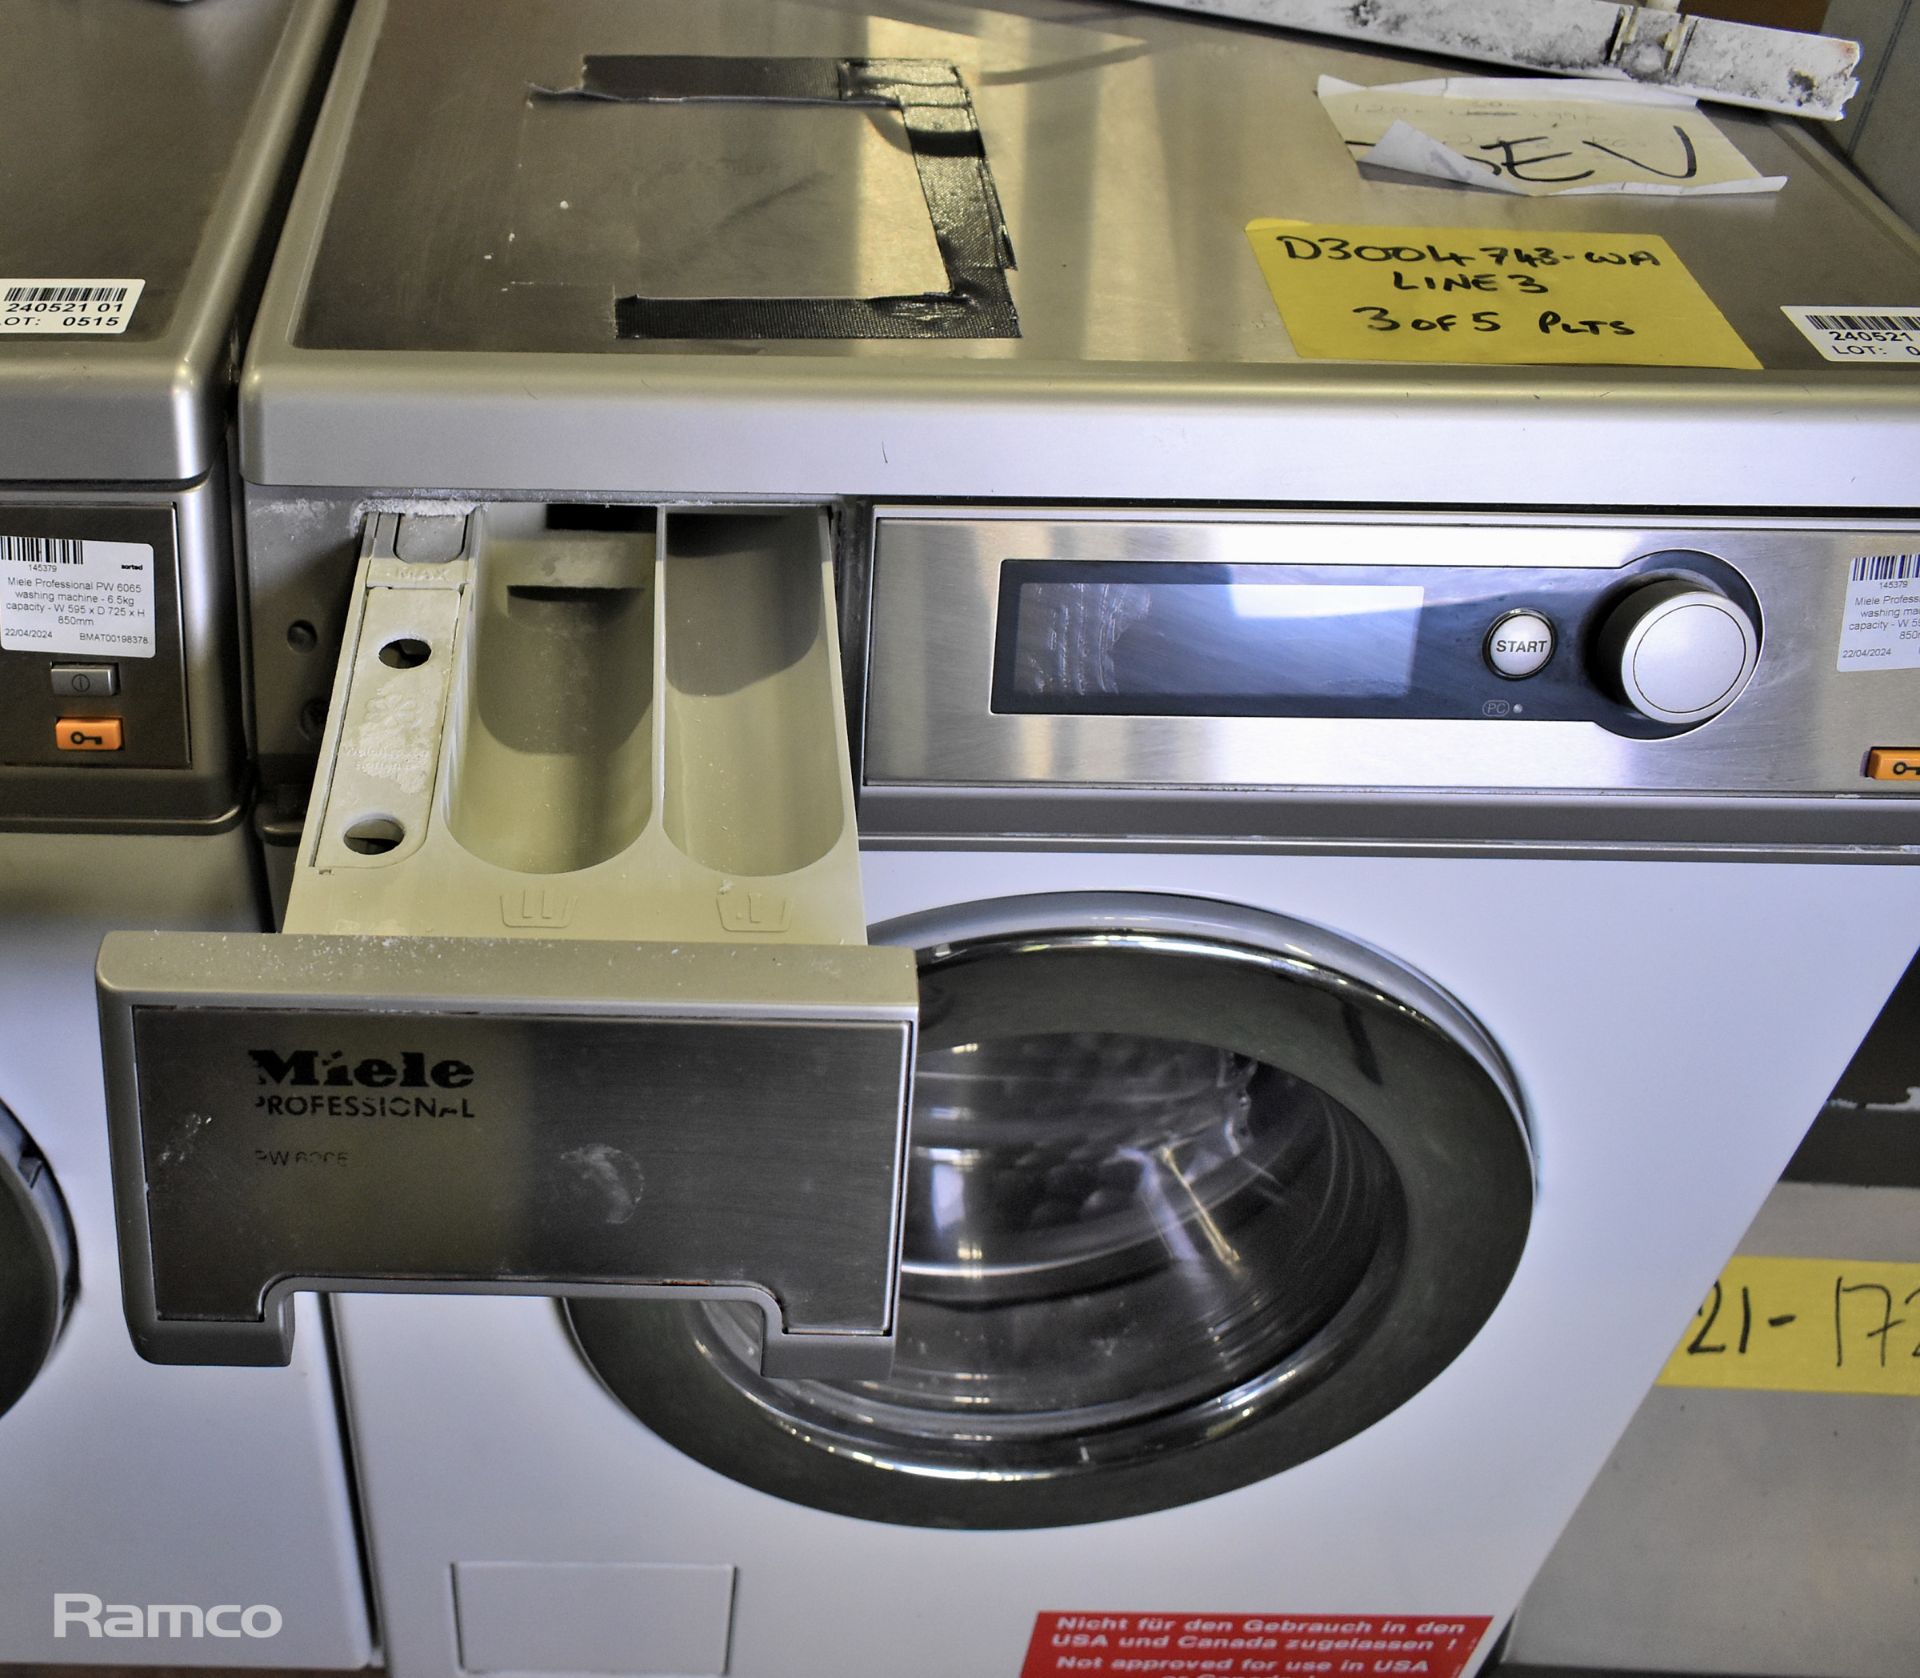 Miele Professional PW 6065 washing machine - 6.5kg capacity - W 595 x D 725 x H 850mm - Image 3 of 4